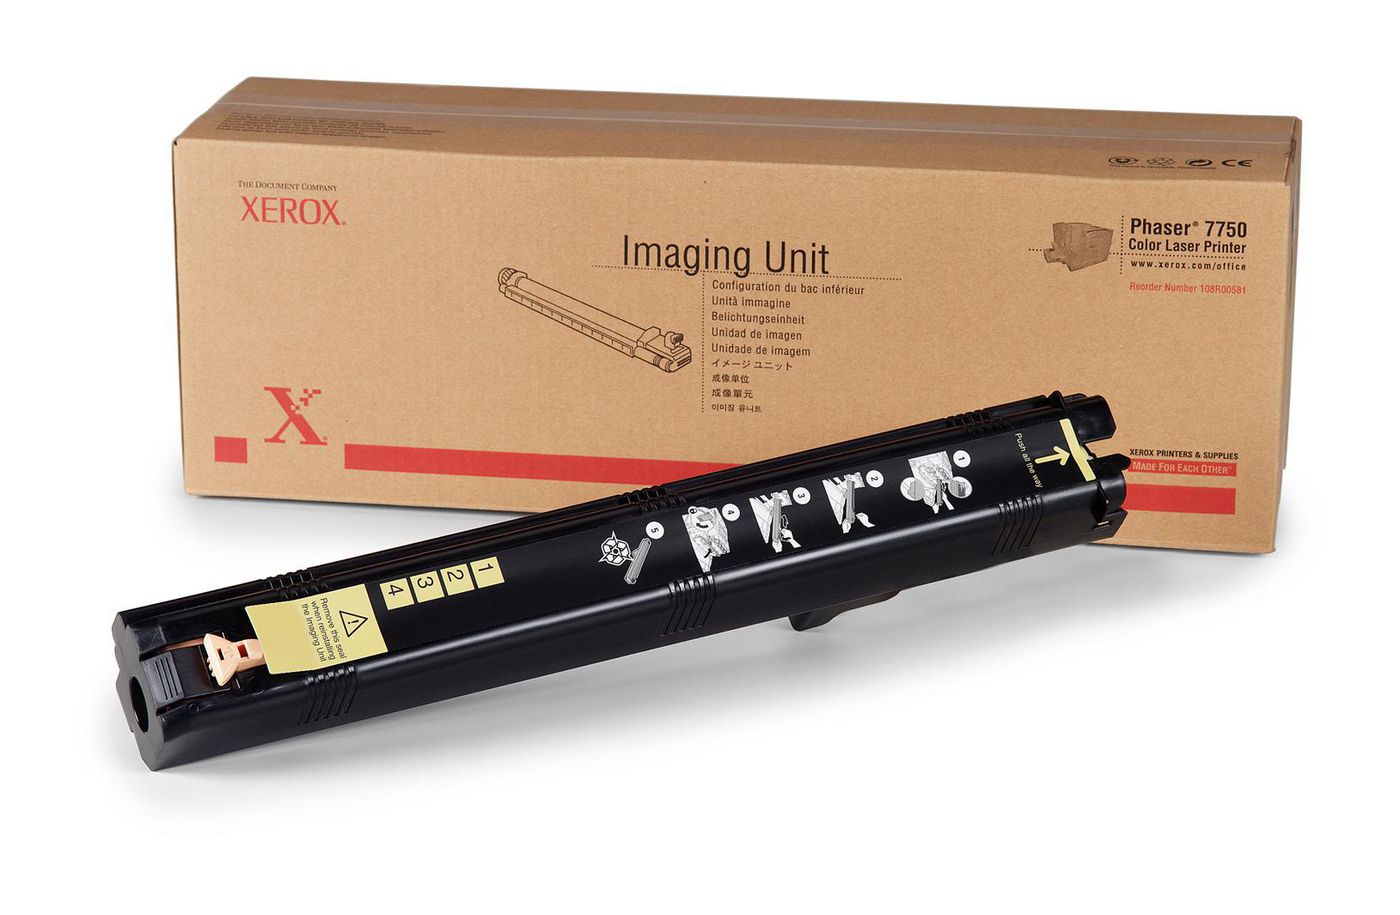 XEROX Imaging Unit Phaser 7750